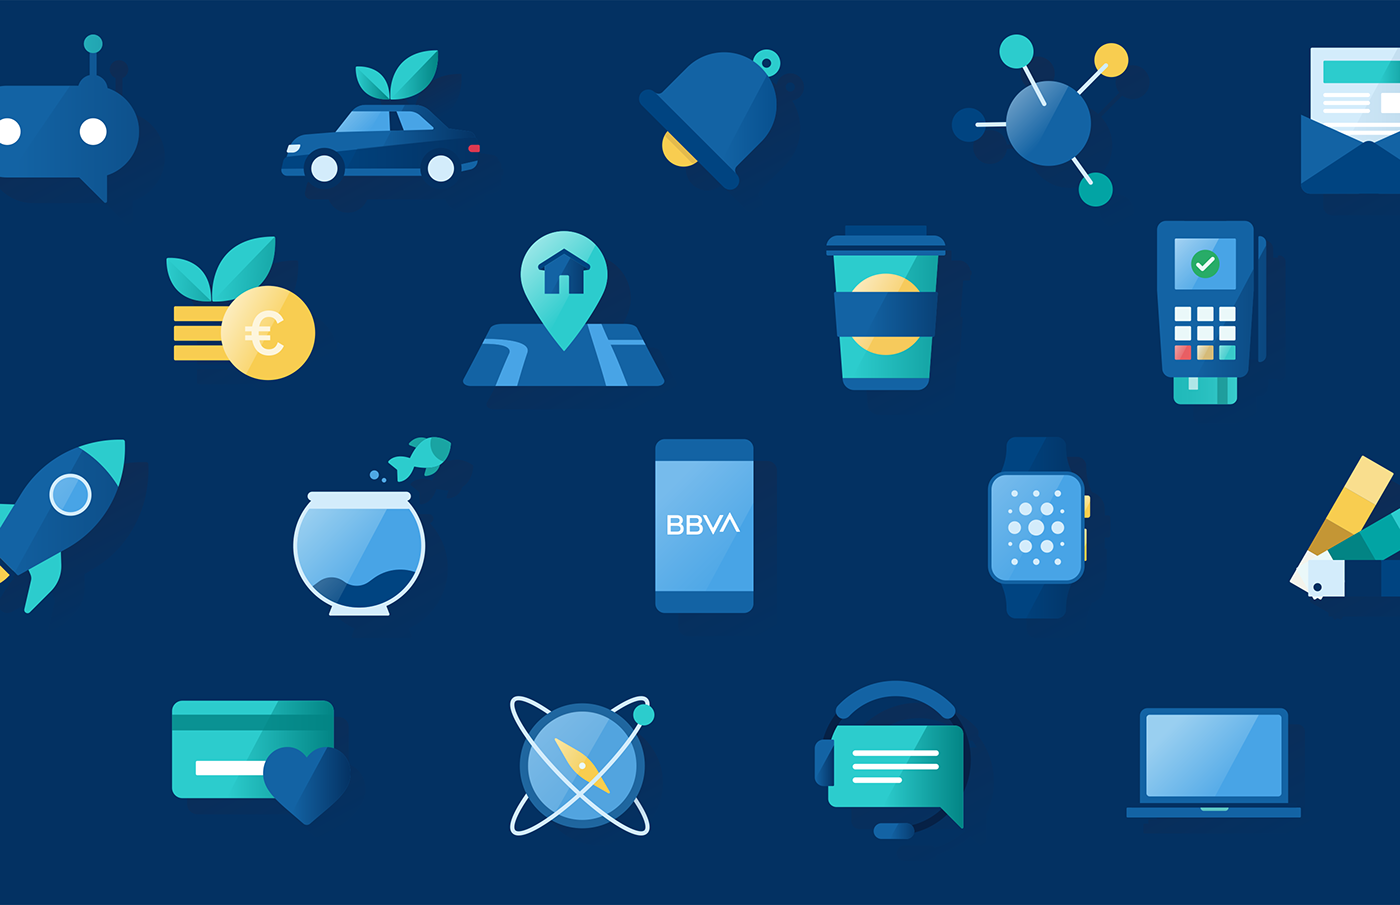 Bank bbva blue concept corporative design iconography icons illustrations pictogram